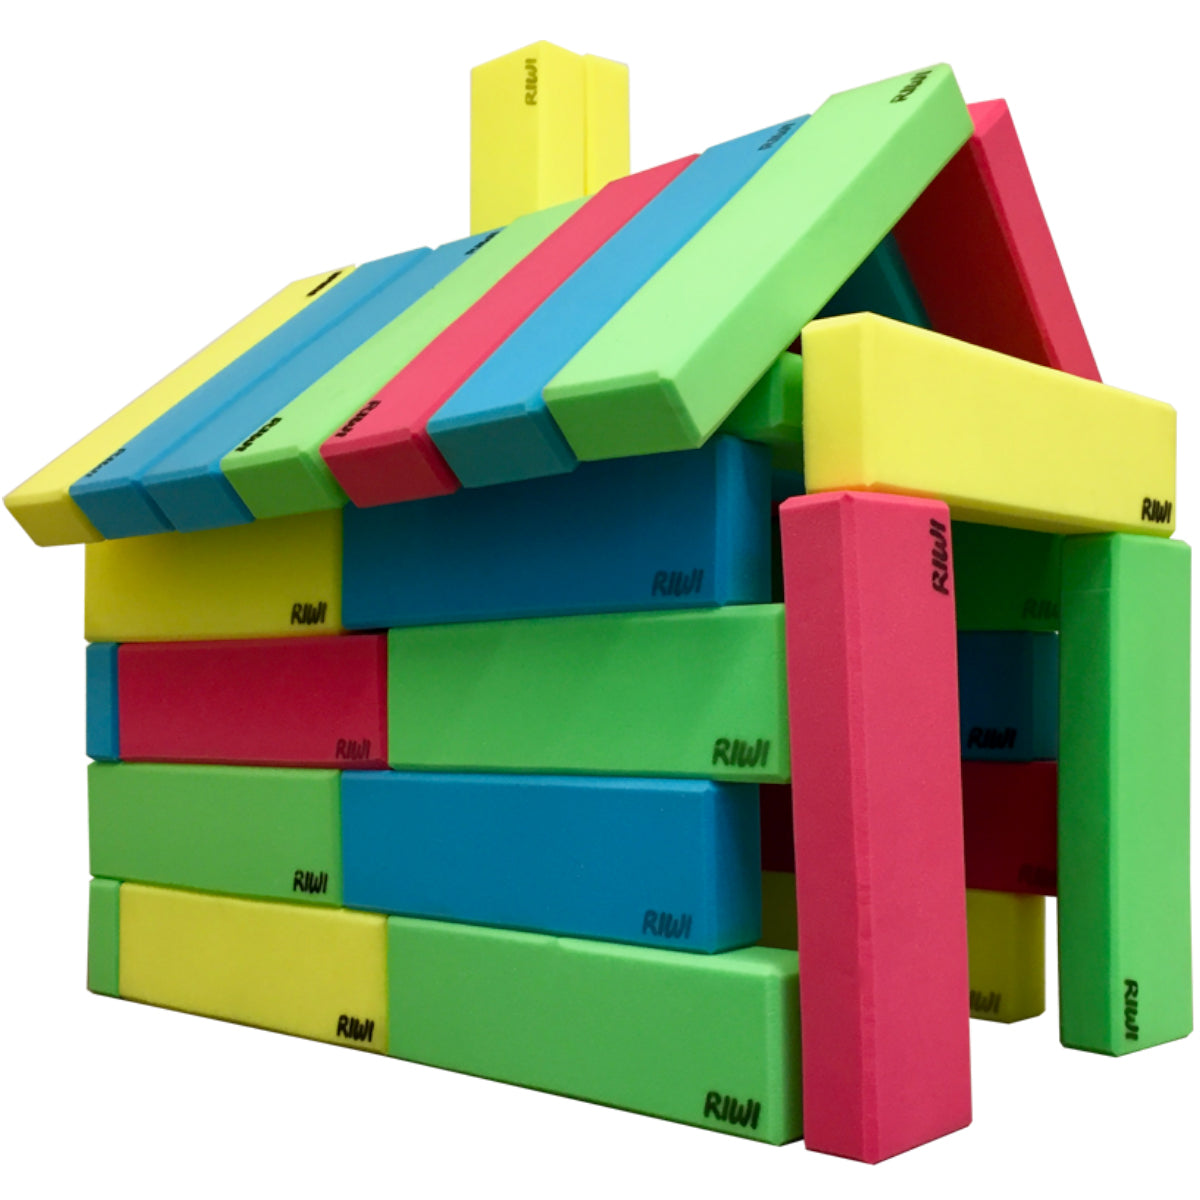 Introducing RIWI Building Blocks! XXL soft foam blocks – RIWI